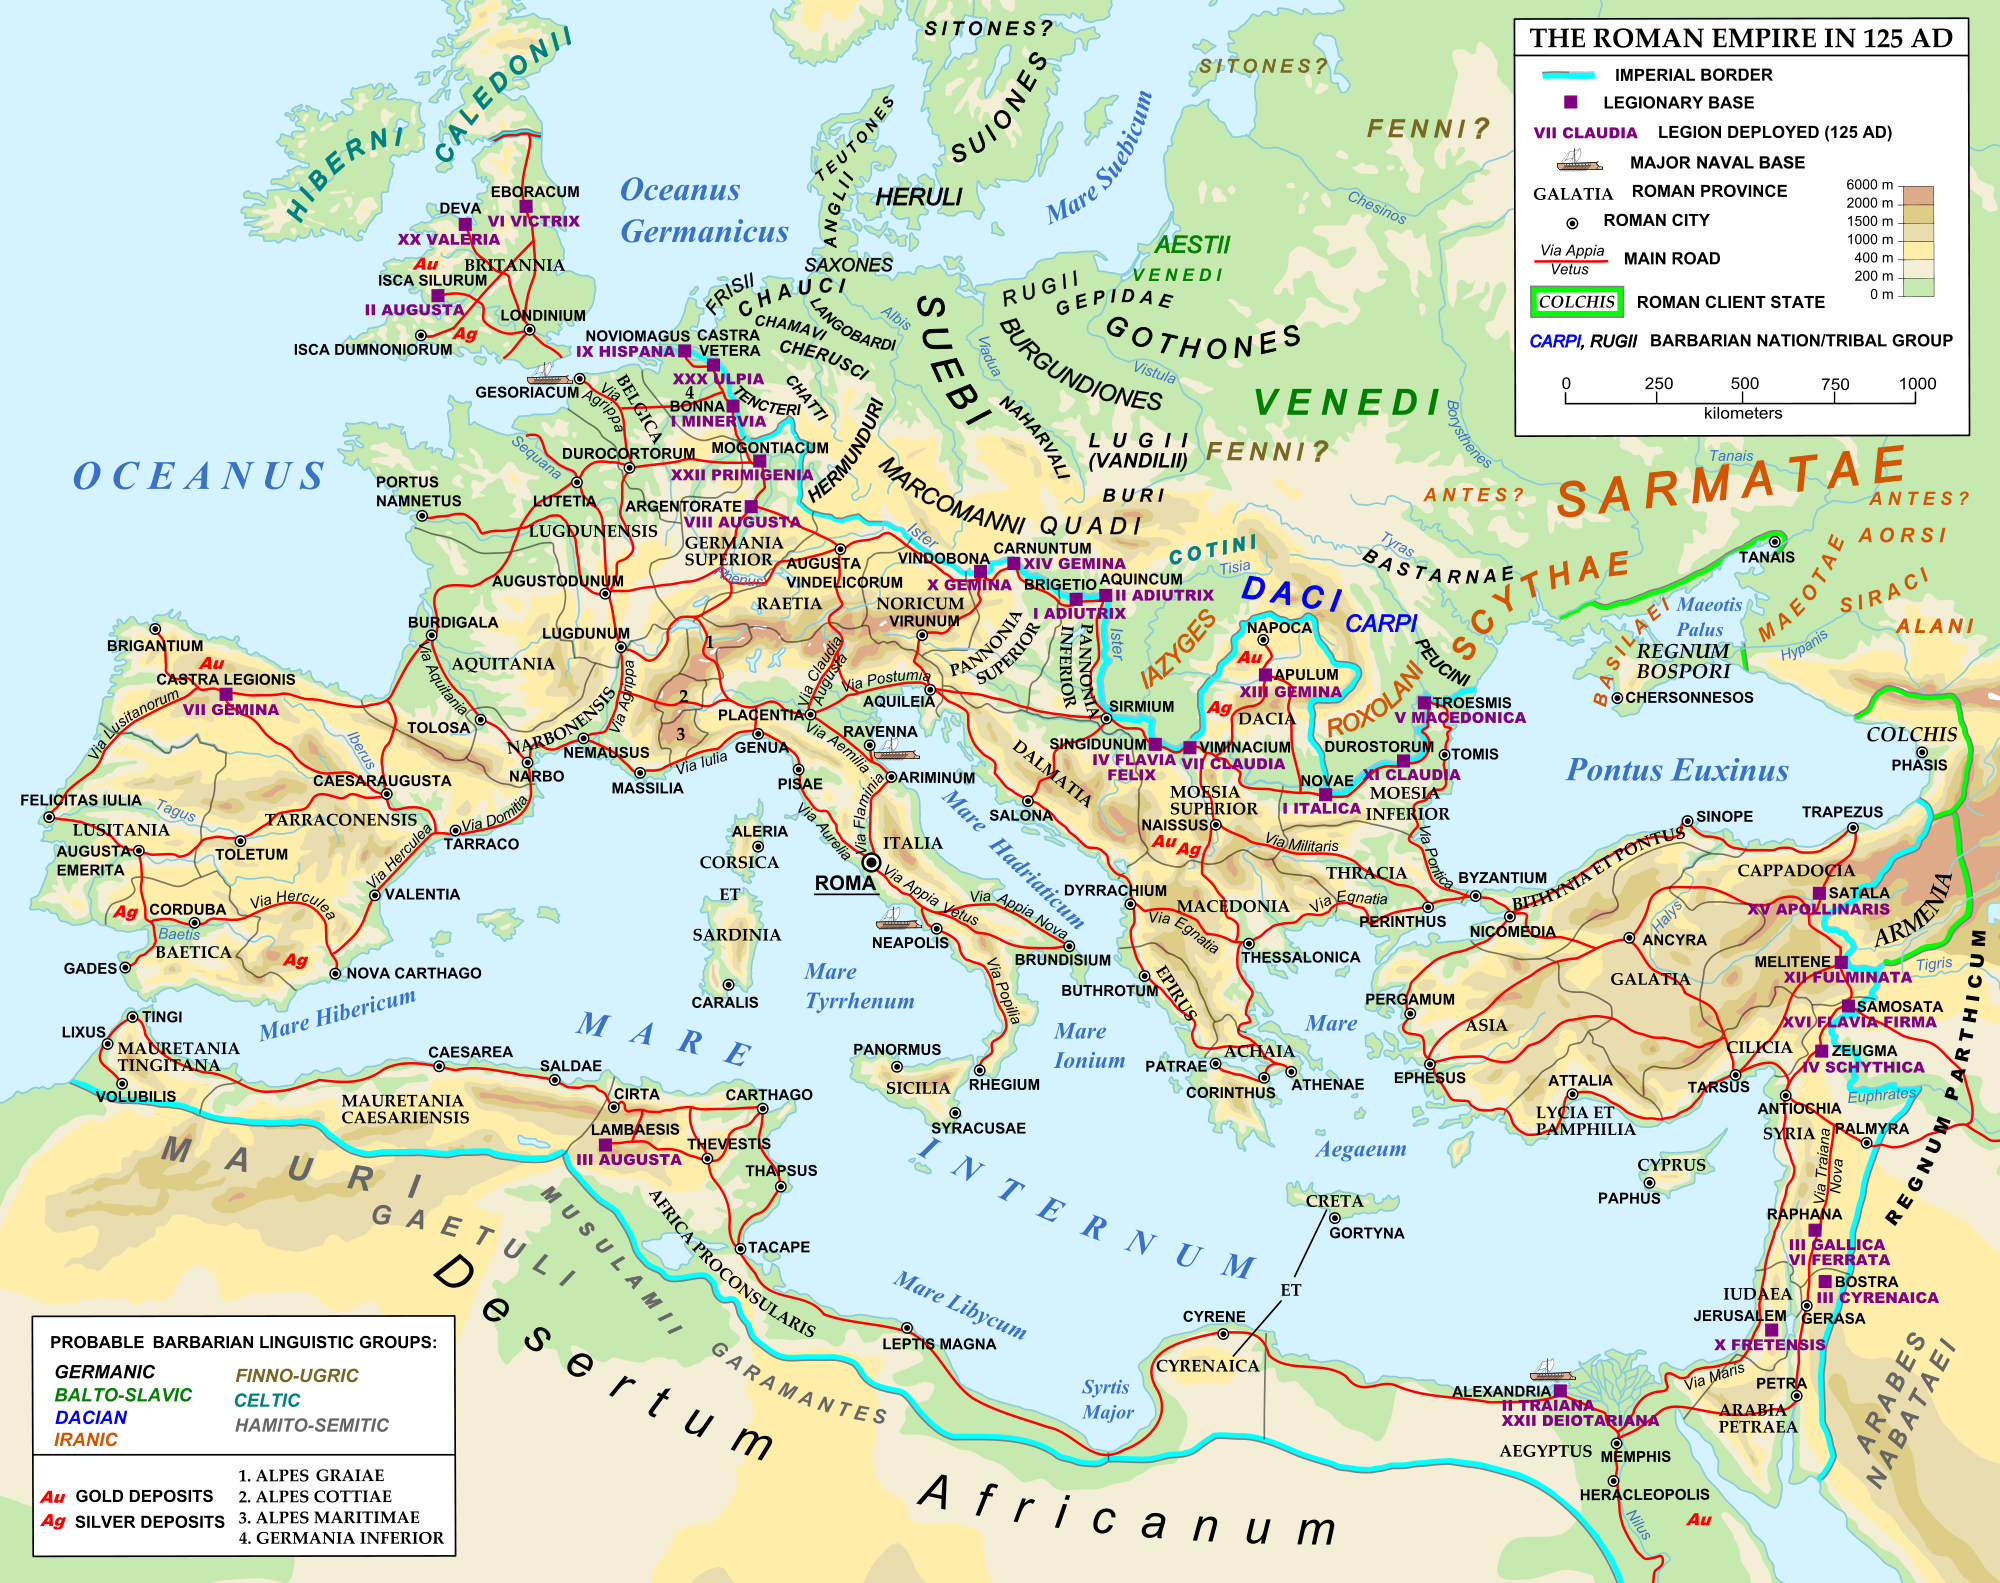 Europe - Ancient History Encyclopedia